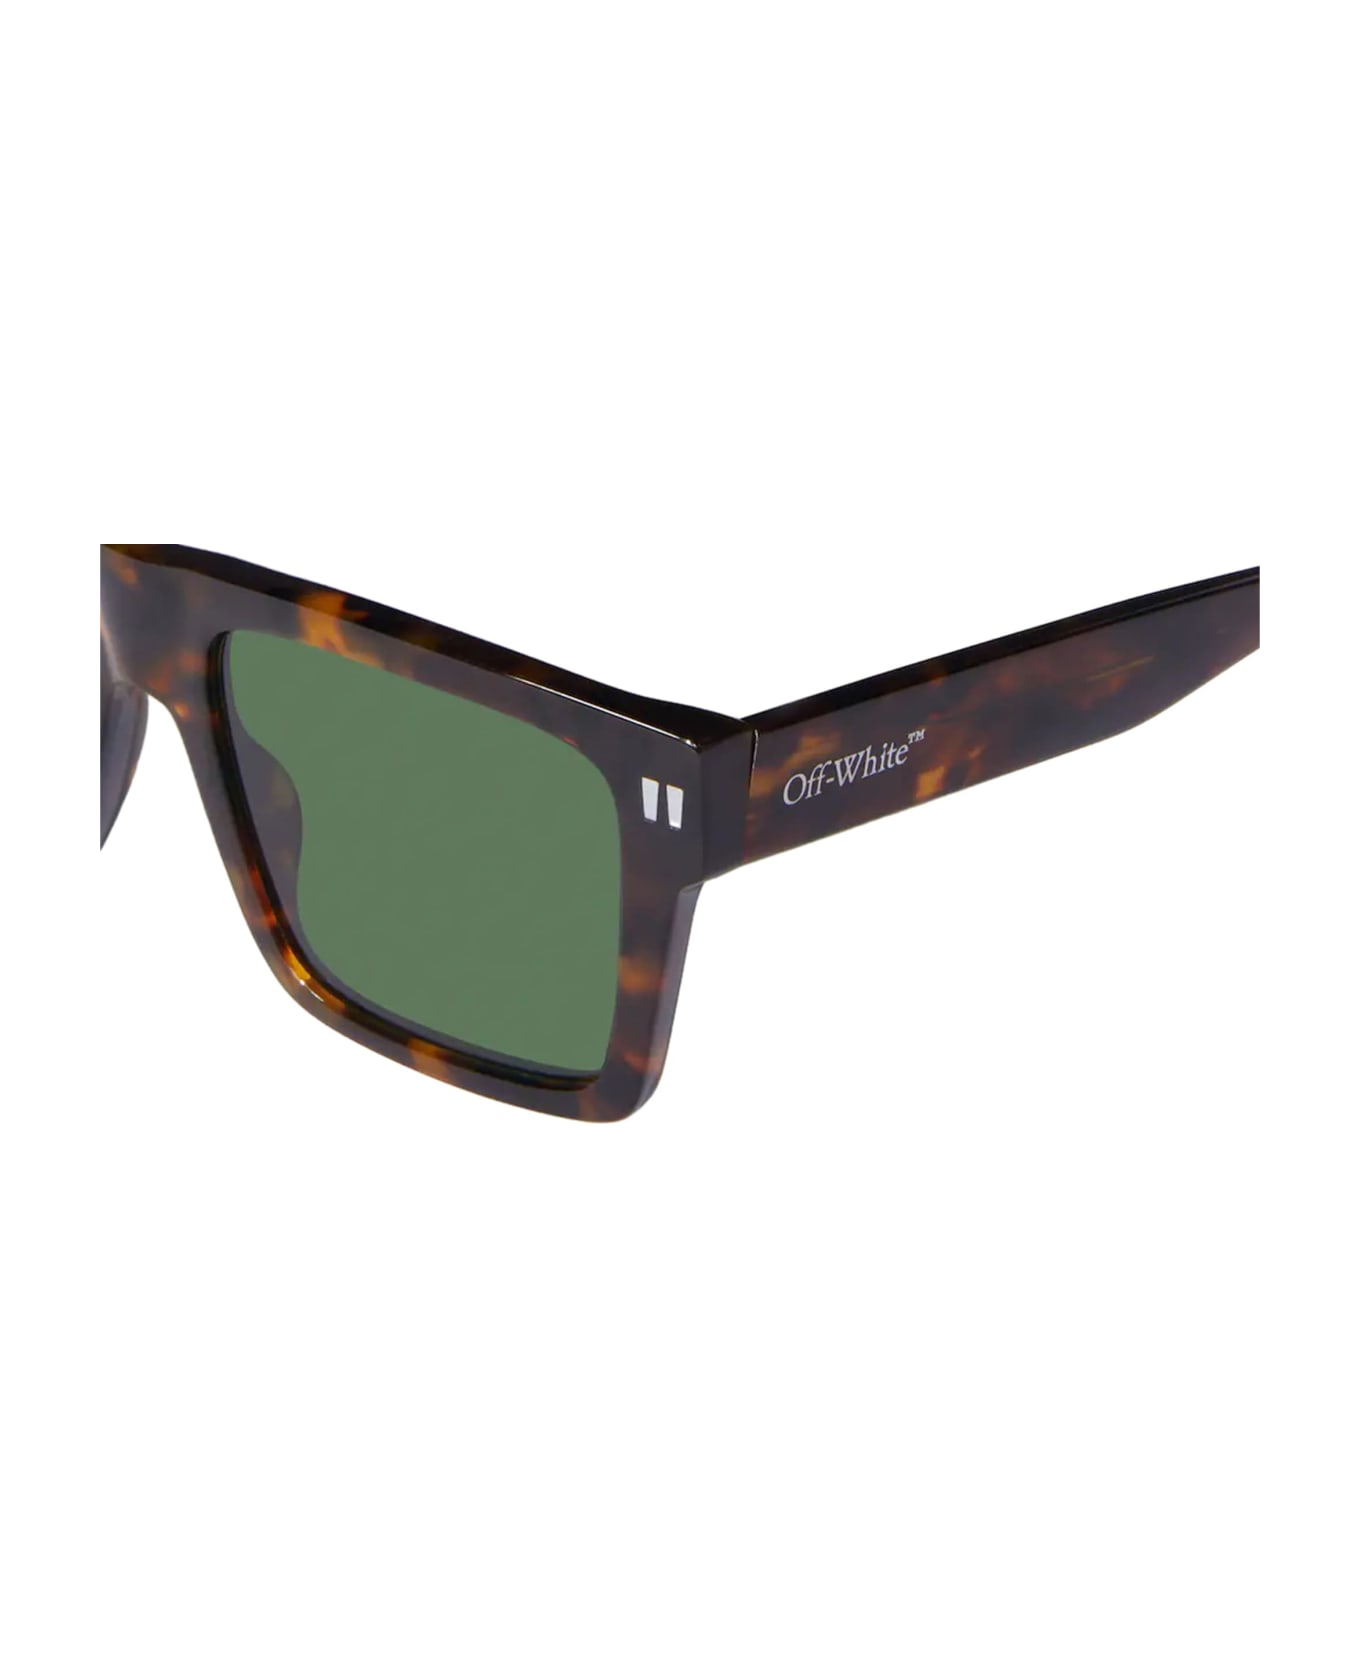 Off-White Lawton - Havana / Green Sunglasses - Havana